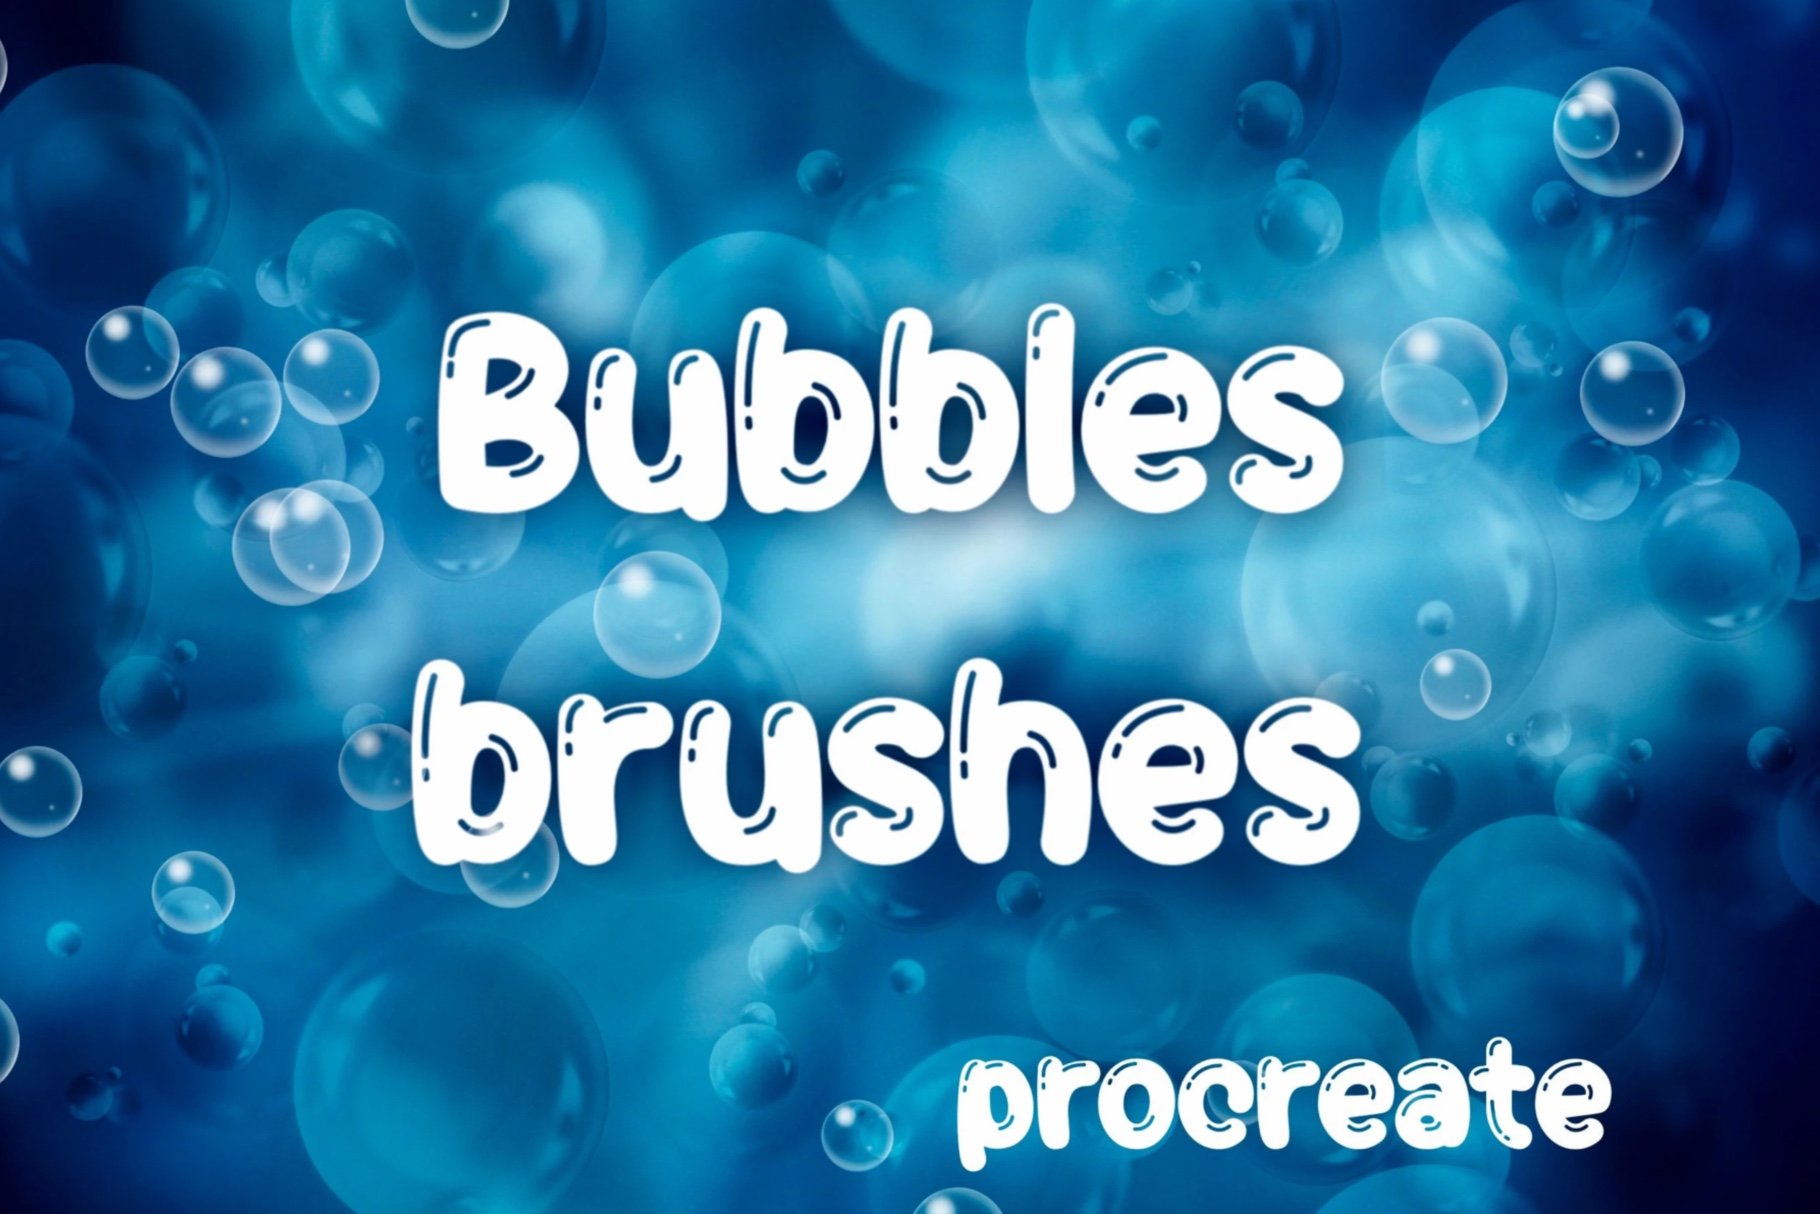 procreate bubble brush free